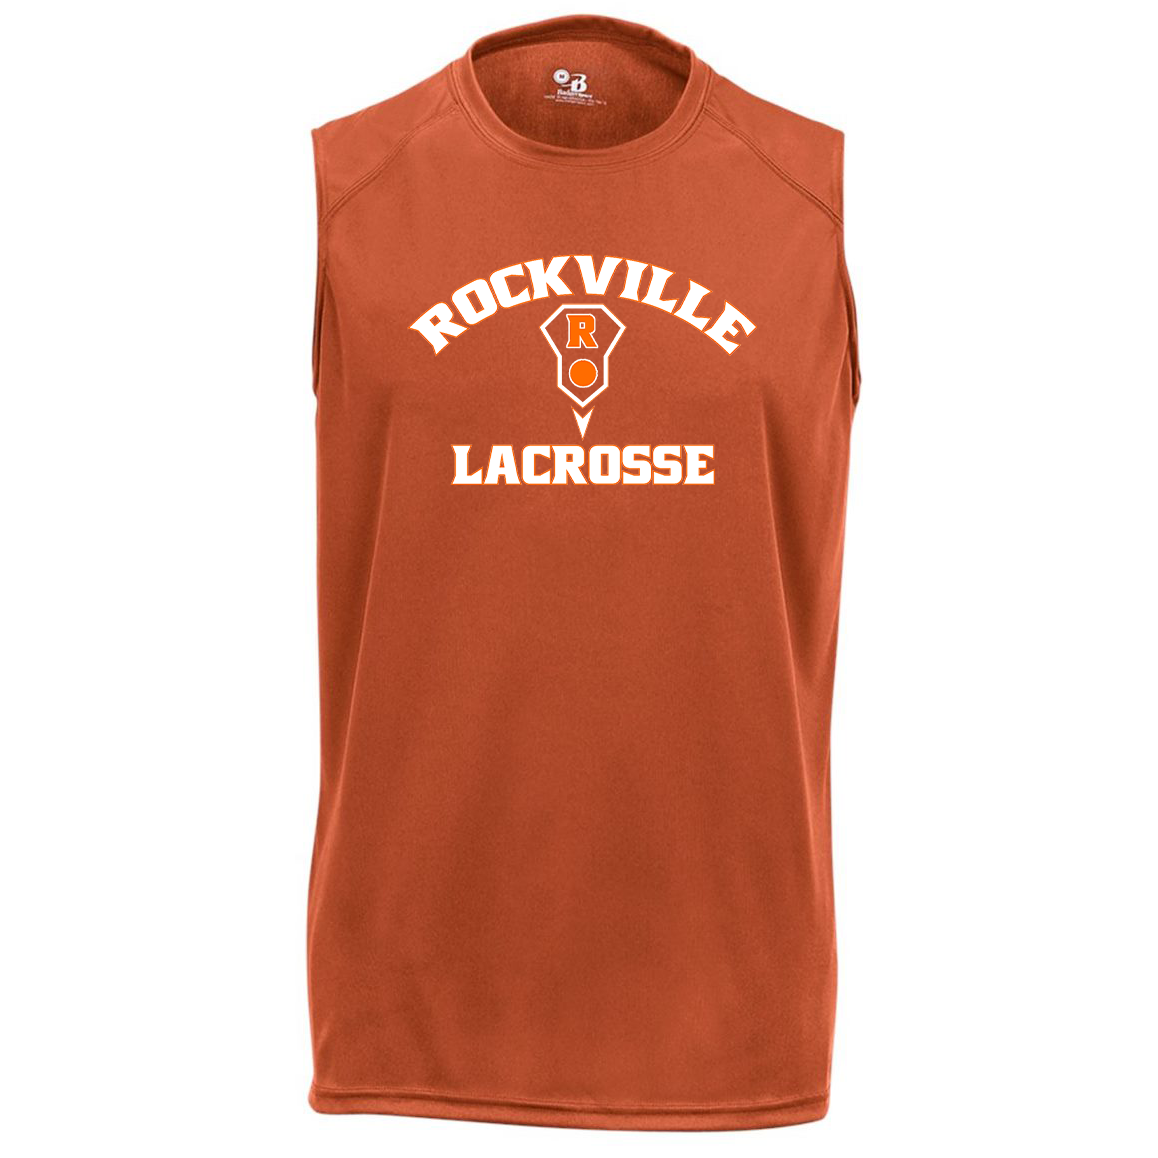 Rockville HS Girls Lacrosse B-Core Sleeveless Performance Tank